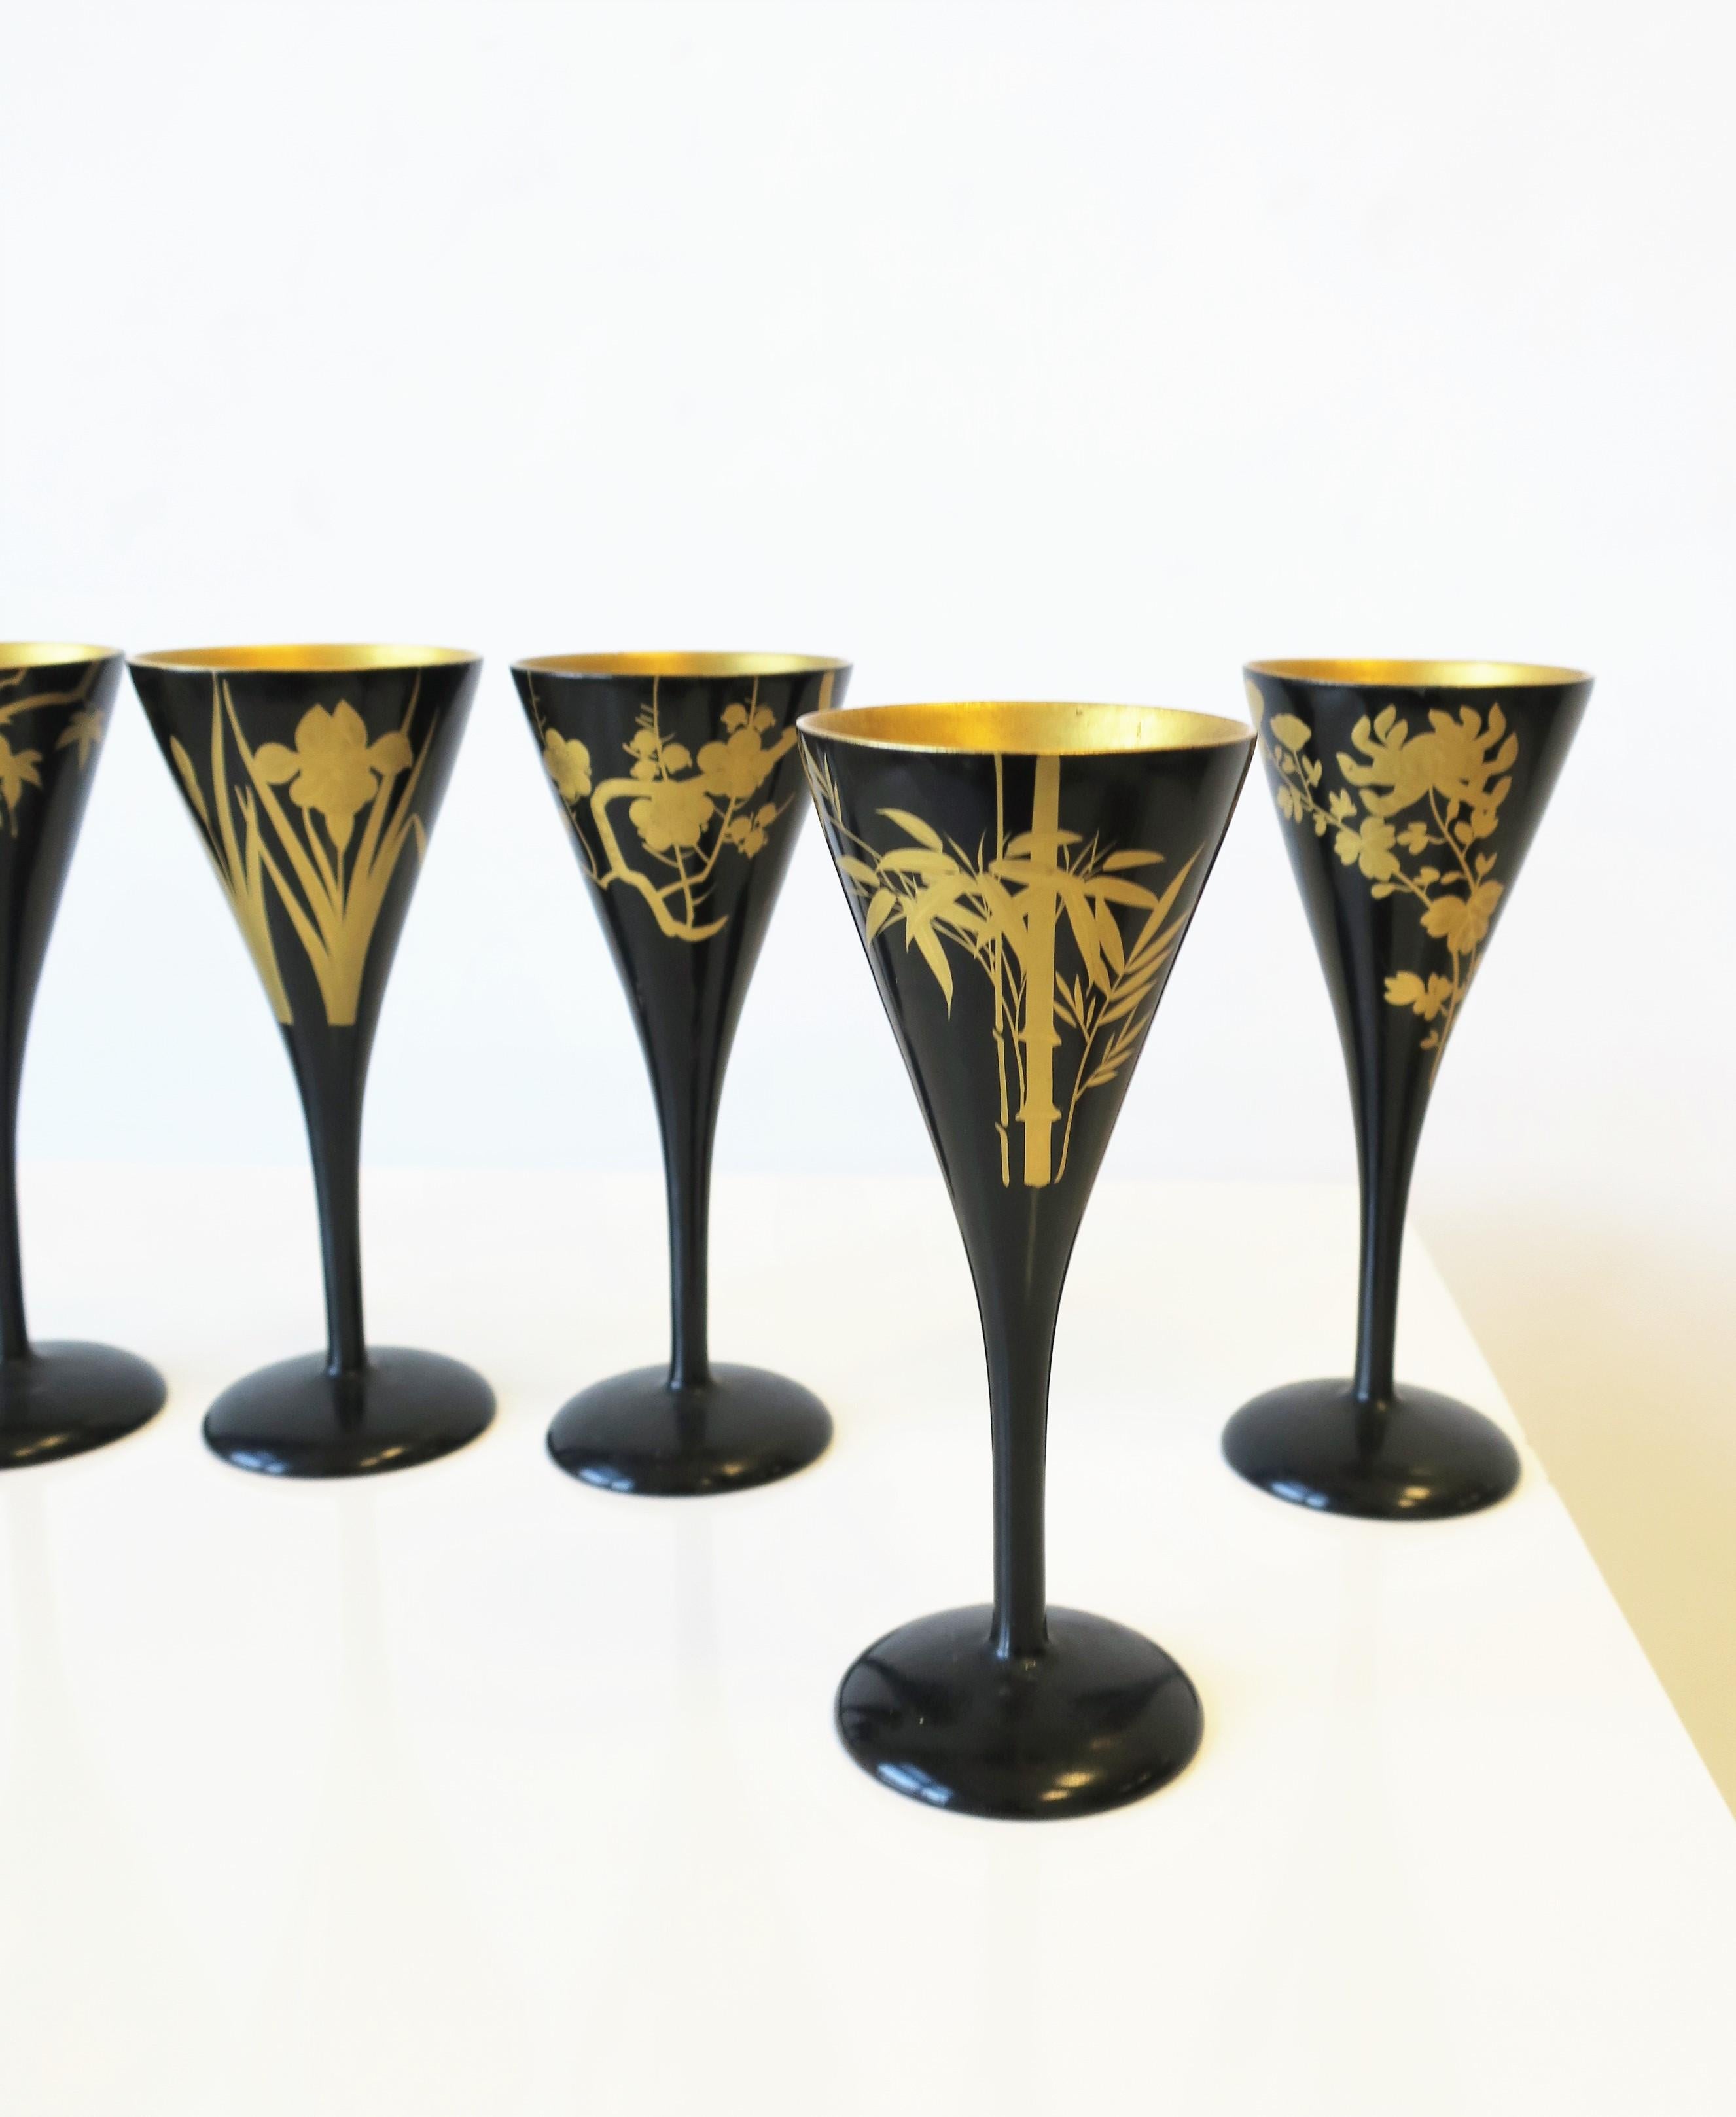 Japanese Black Lacquer & Gold Sake, Champagne Flutes or Wine Stemware, Set of 6 For Sale 1